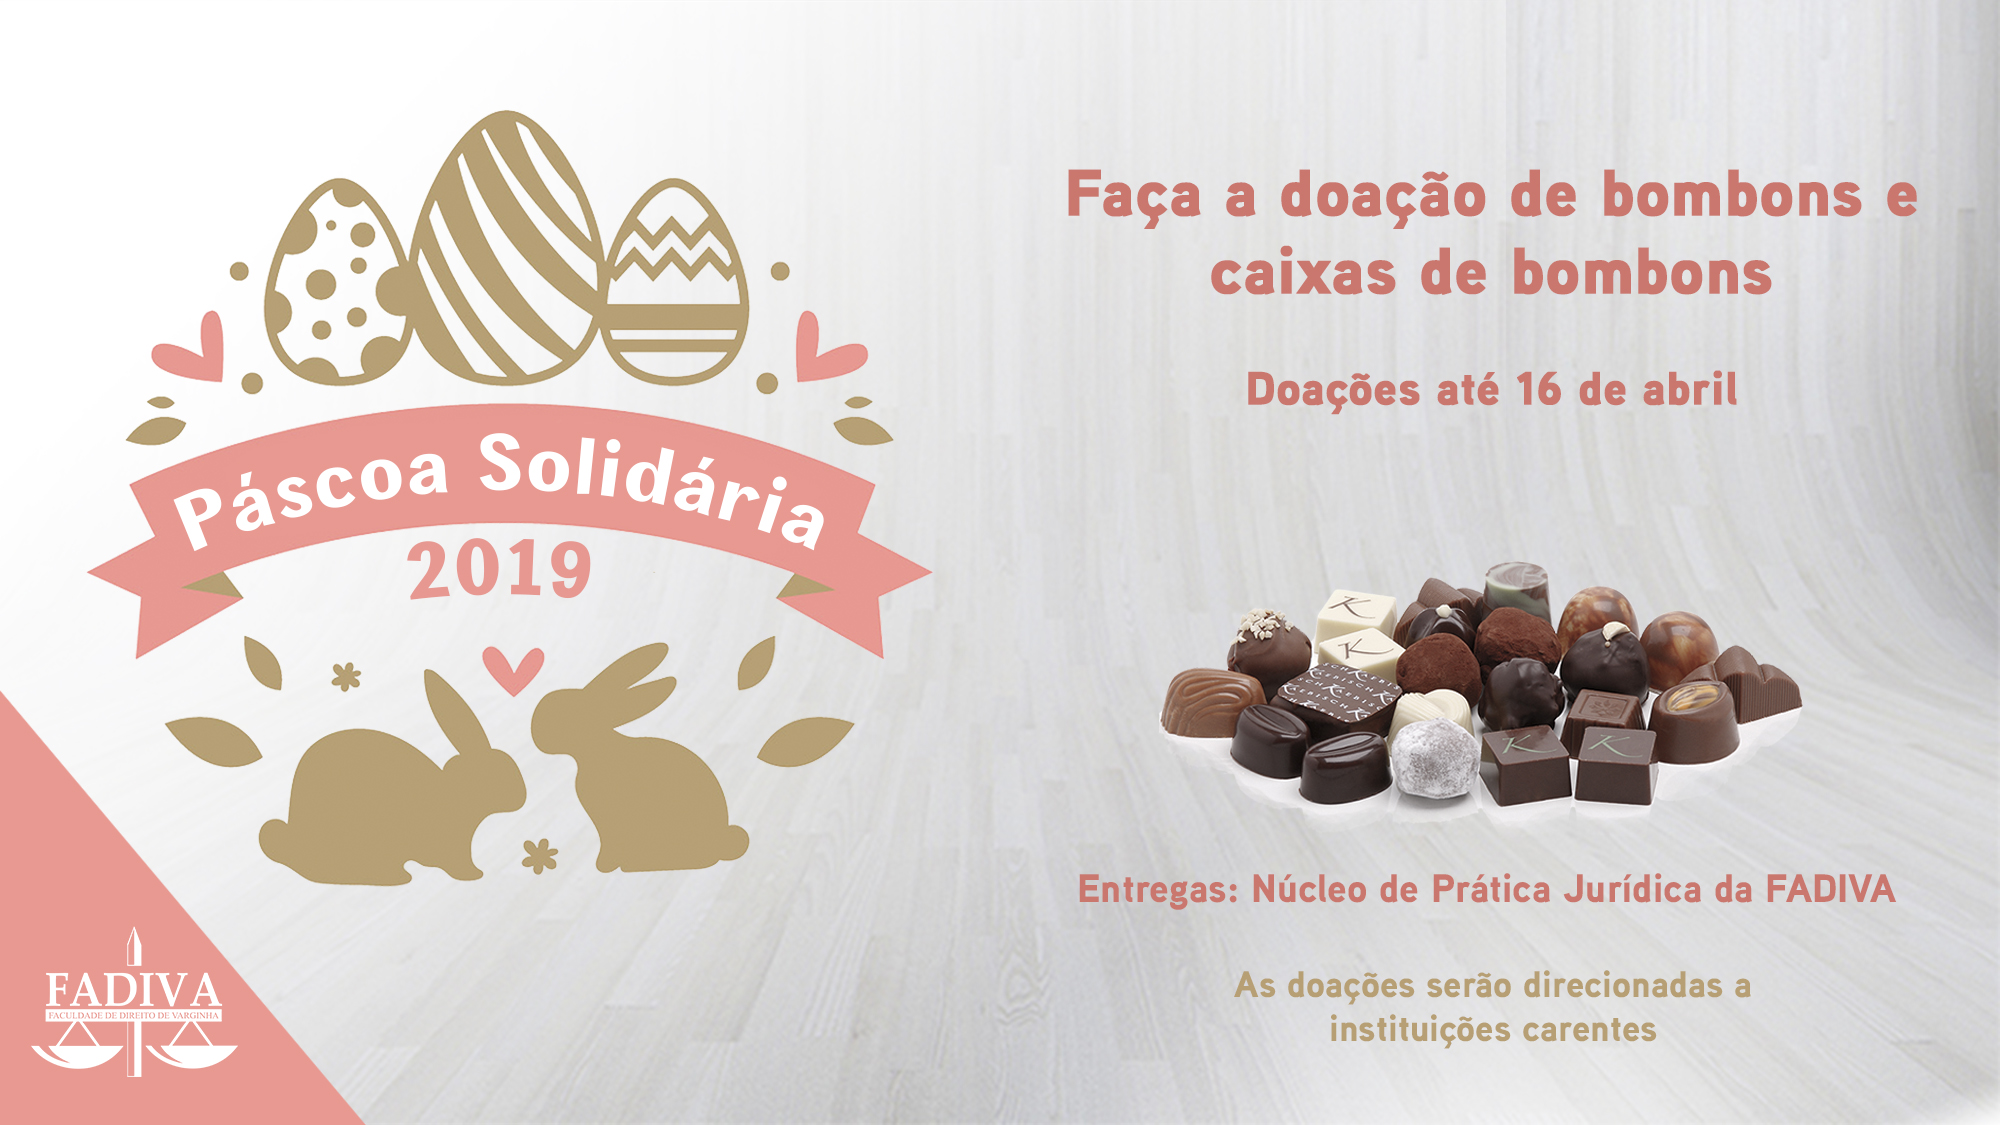 PAscoa SolidAria 2019 1 1